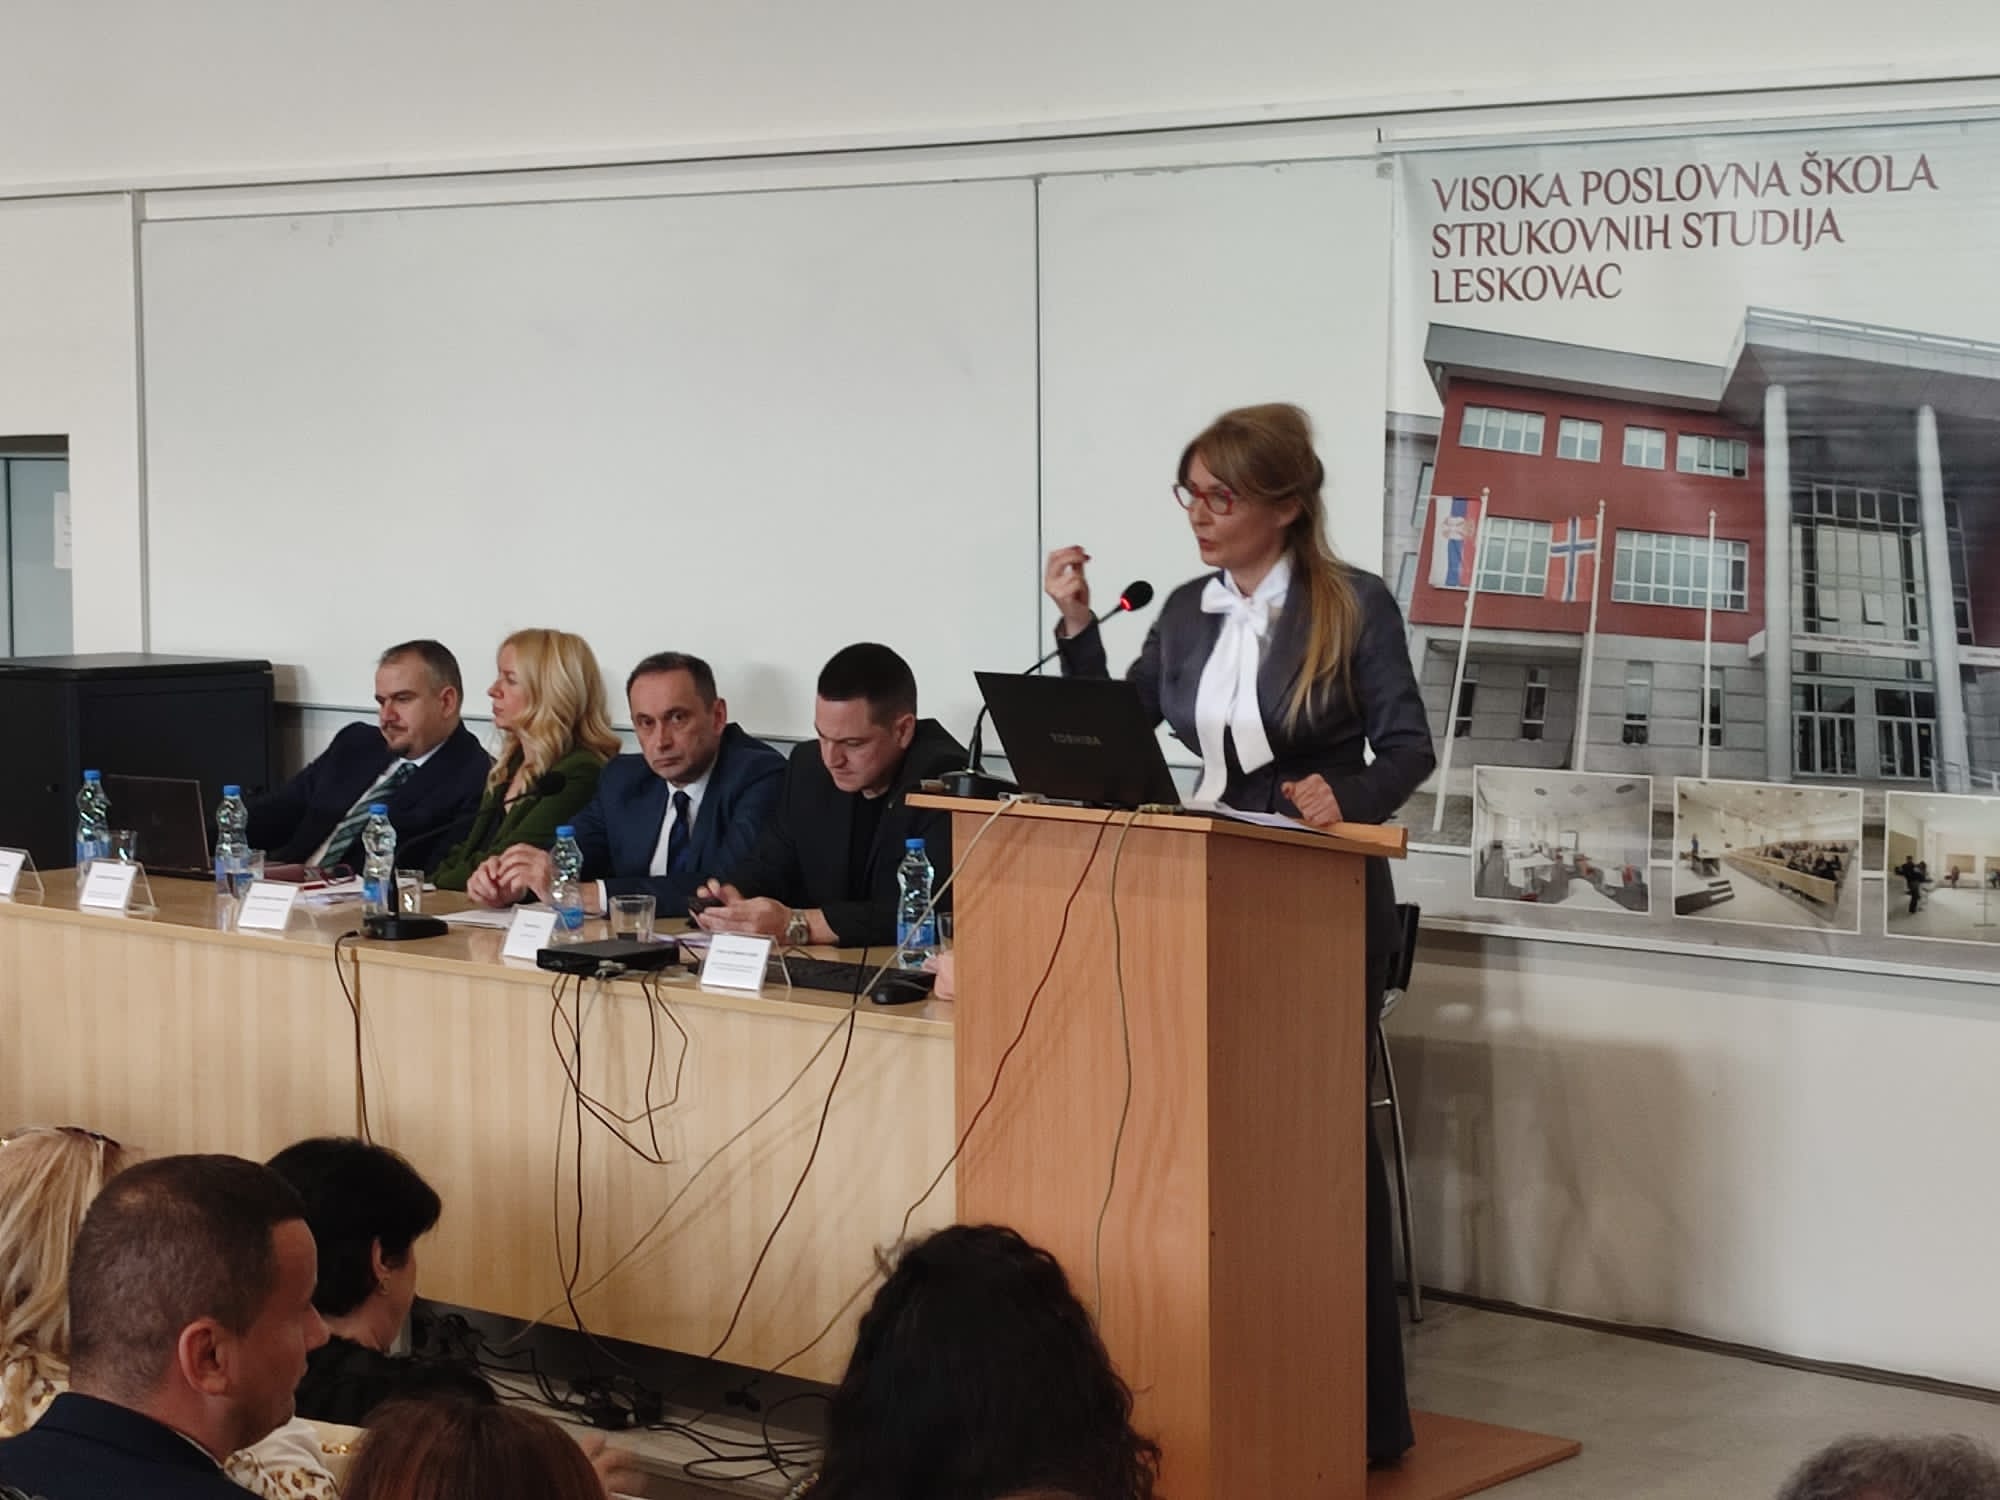 Mrs Grujić in Leskovac: Law amendments to ensure higher quality of education